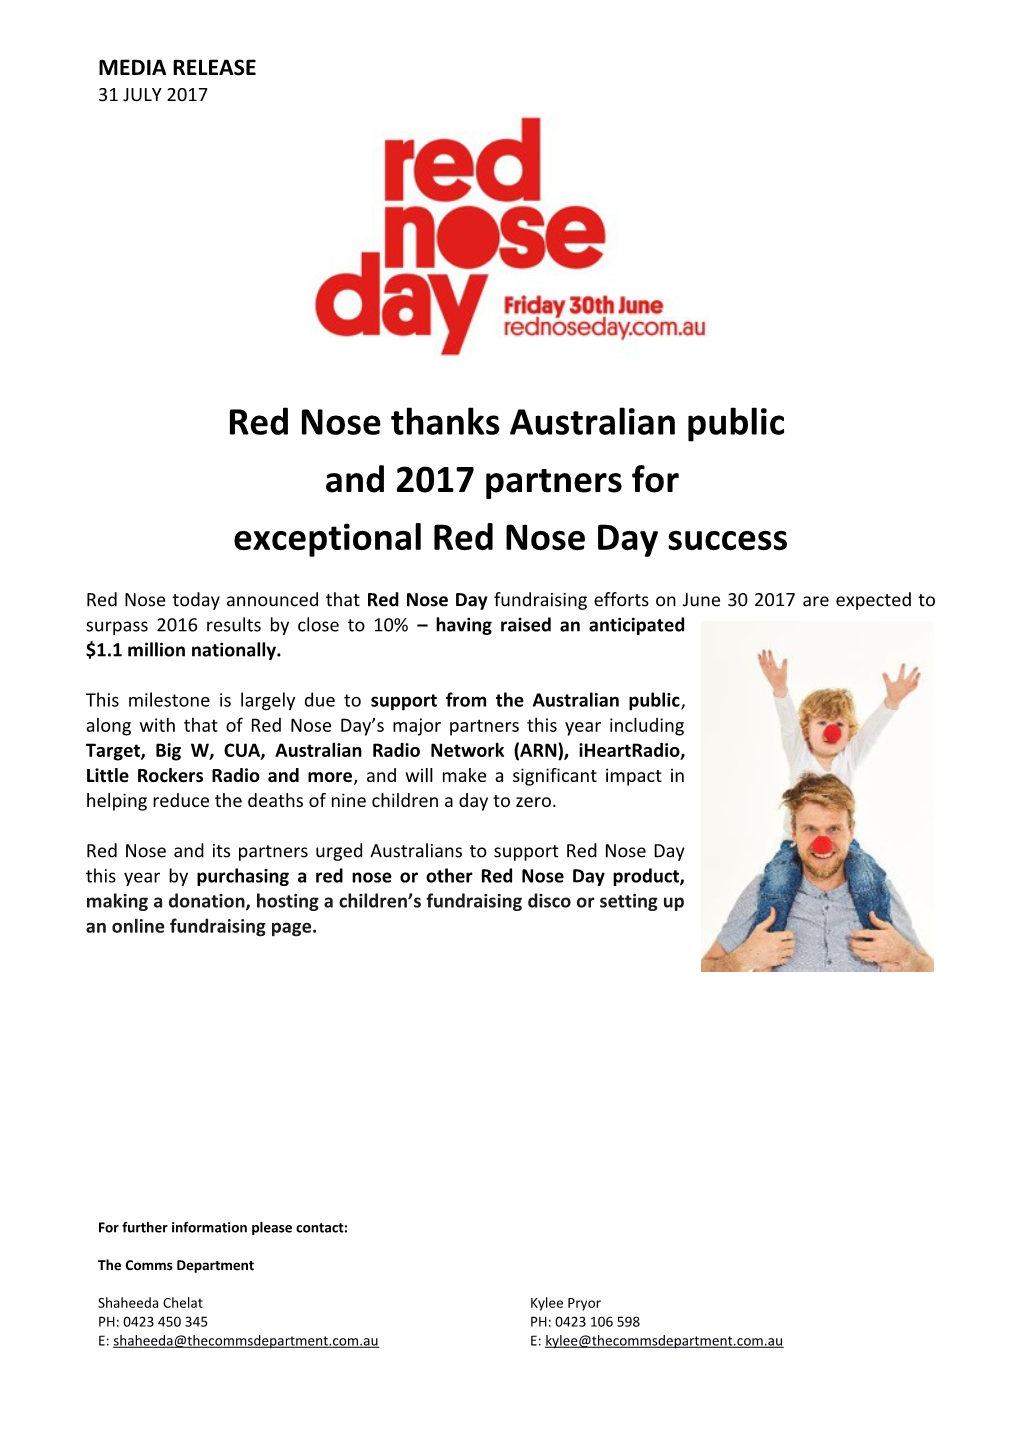 Red Nose Thanks Australian Public